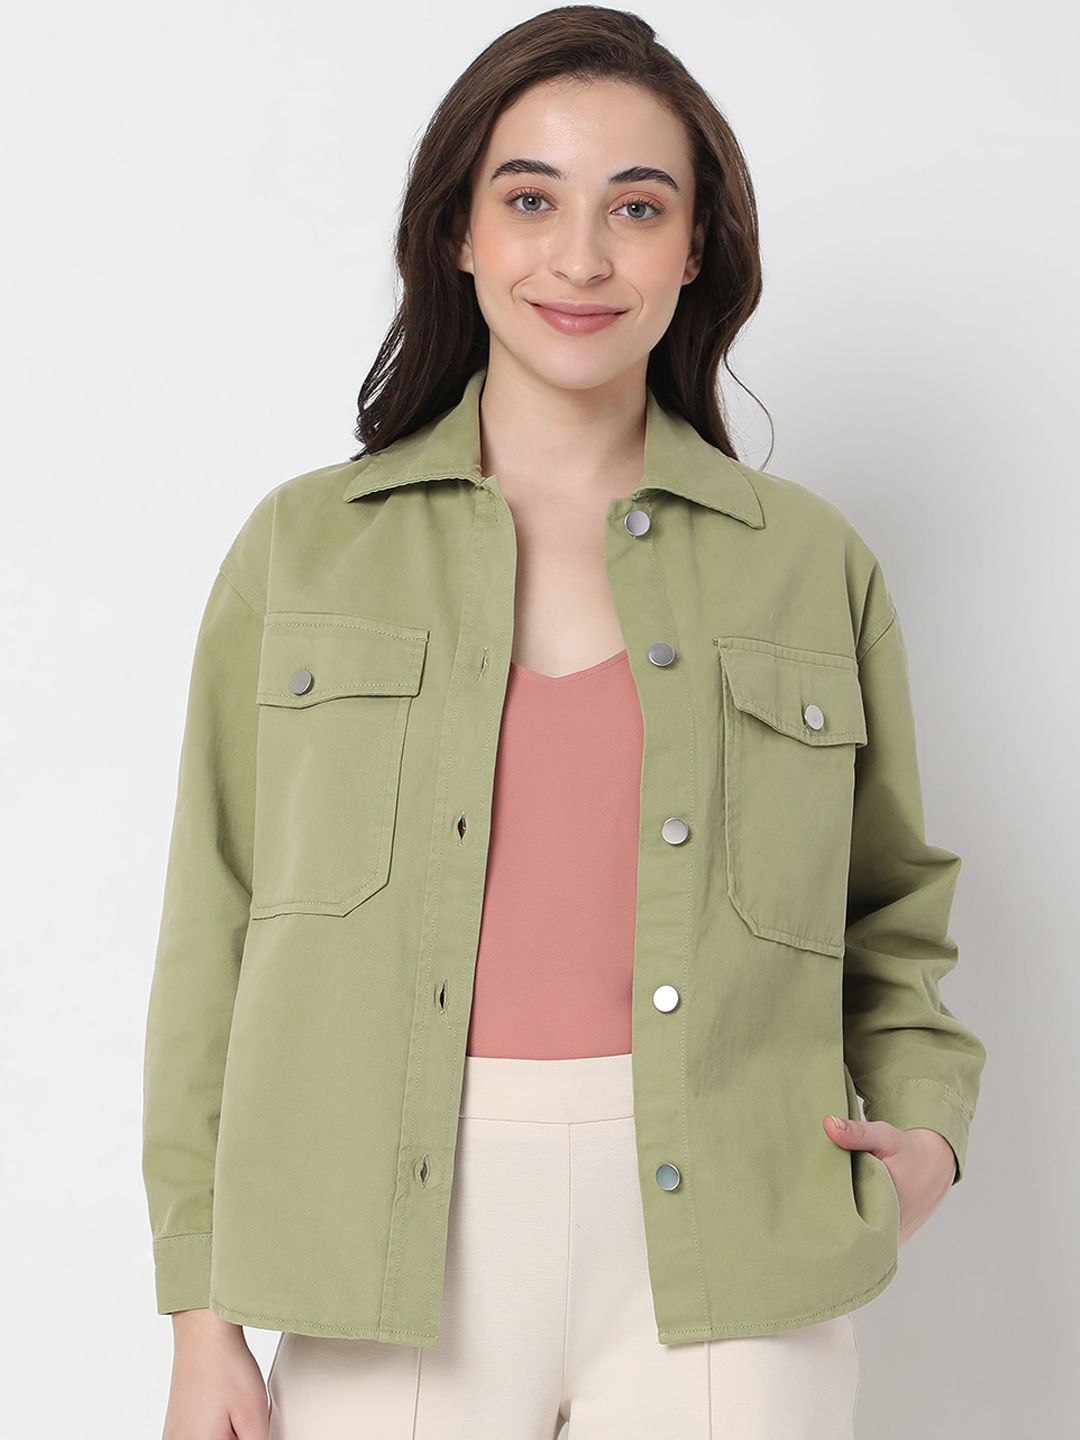 Vero Moda Women Green Crop Tailored Jacket Price in India